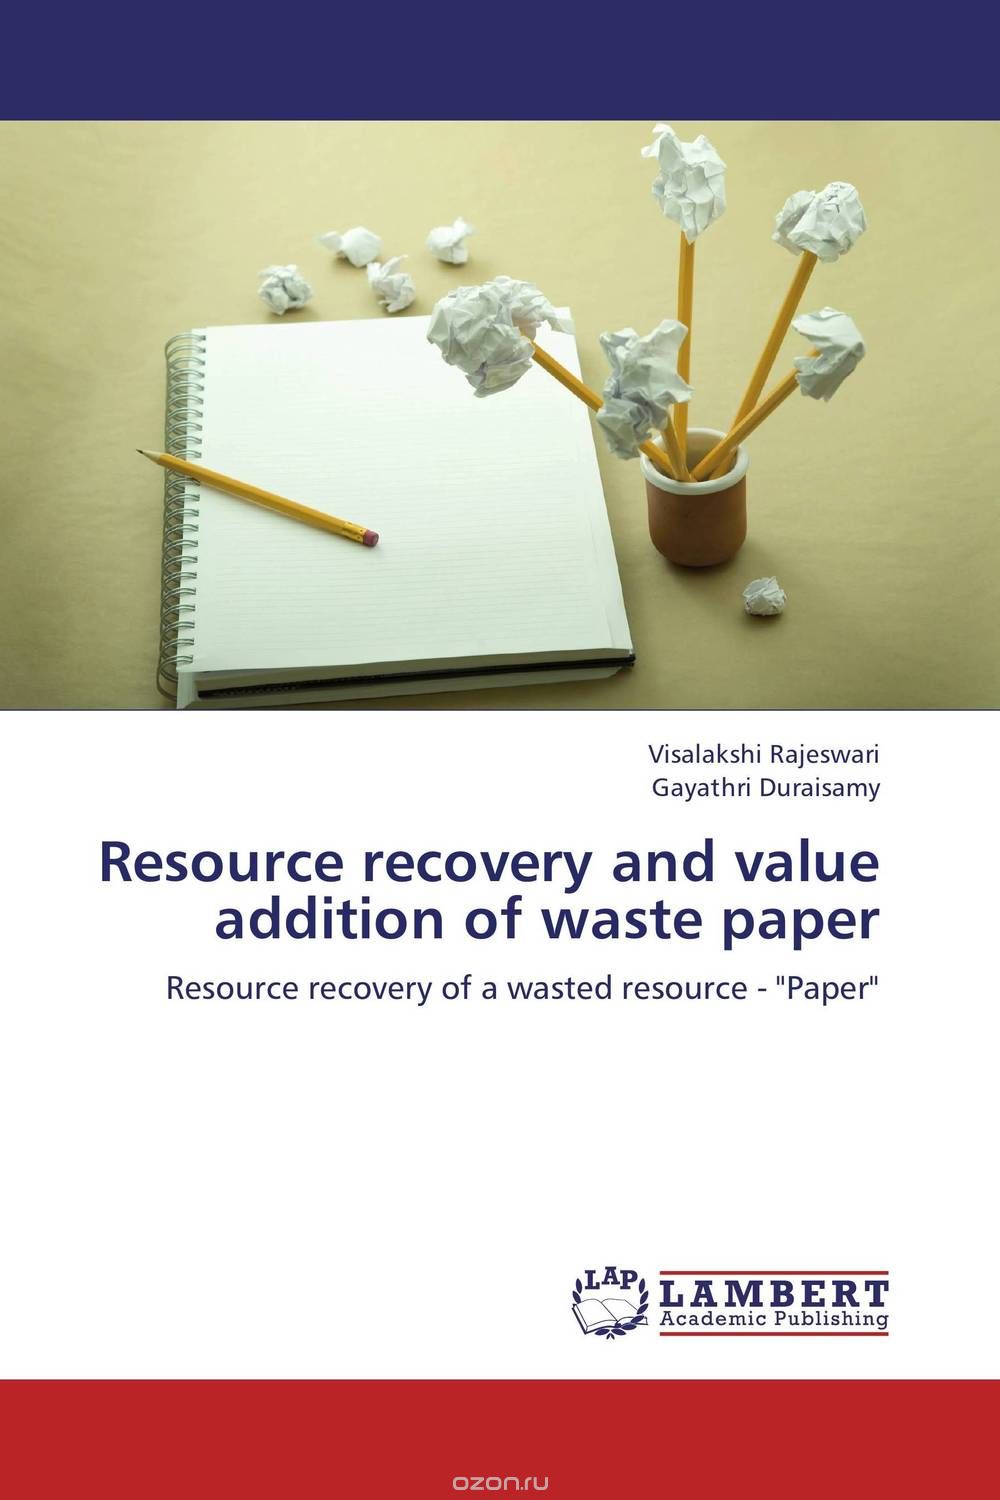 Скачать книгу "Resource recovery and value addition of waste paper"